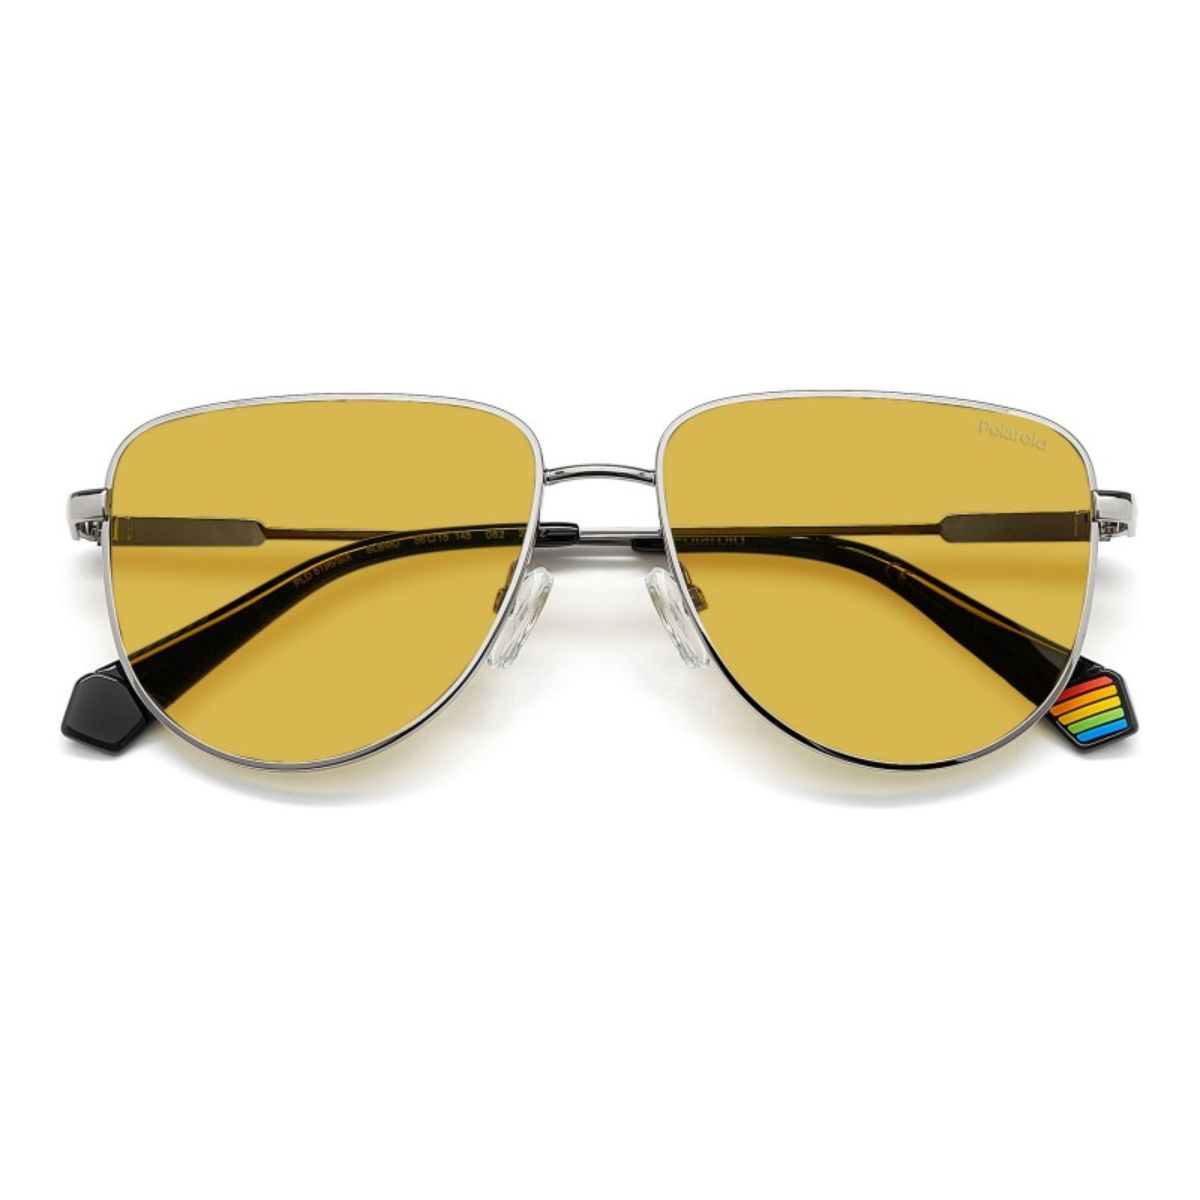 'Stylish Polaroid 6196 Sunglasses For Men's and Women's At Optorium"